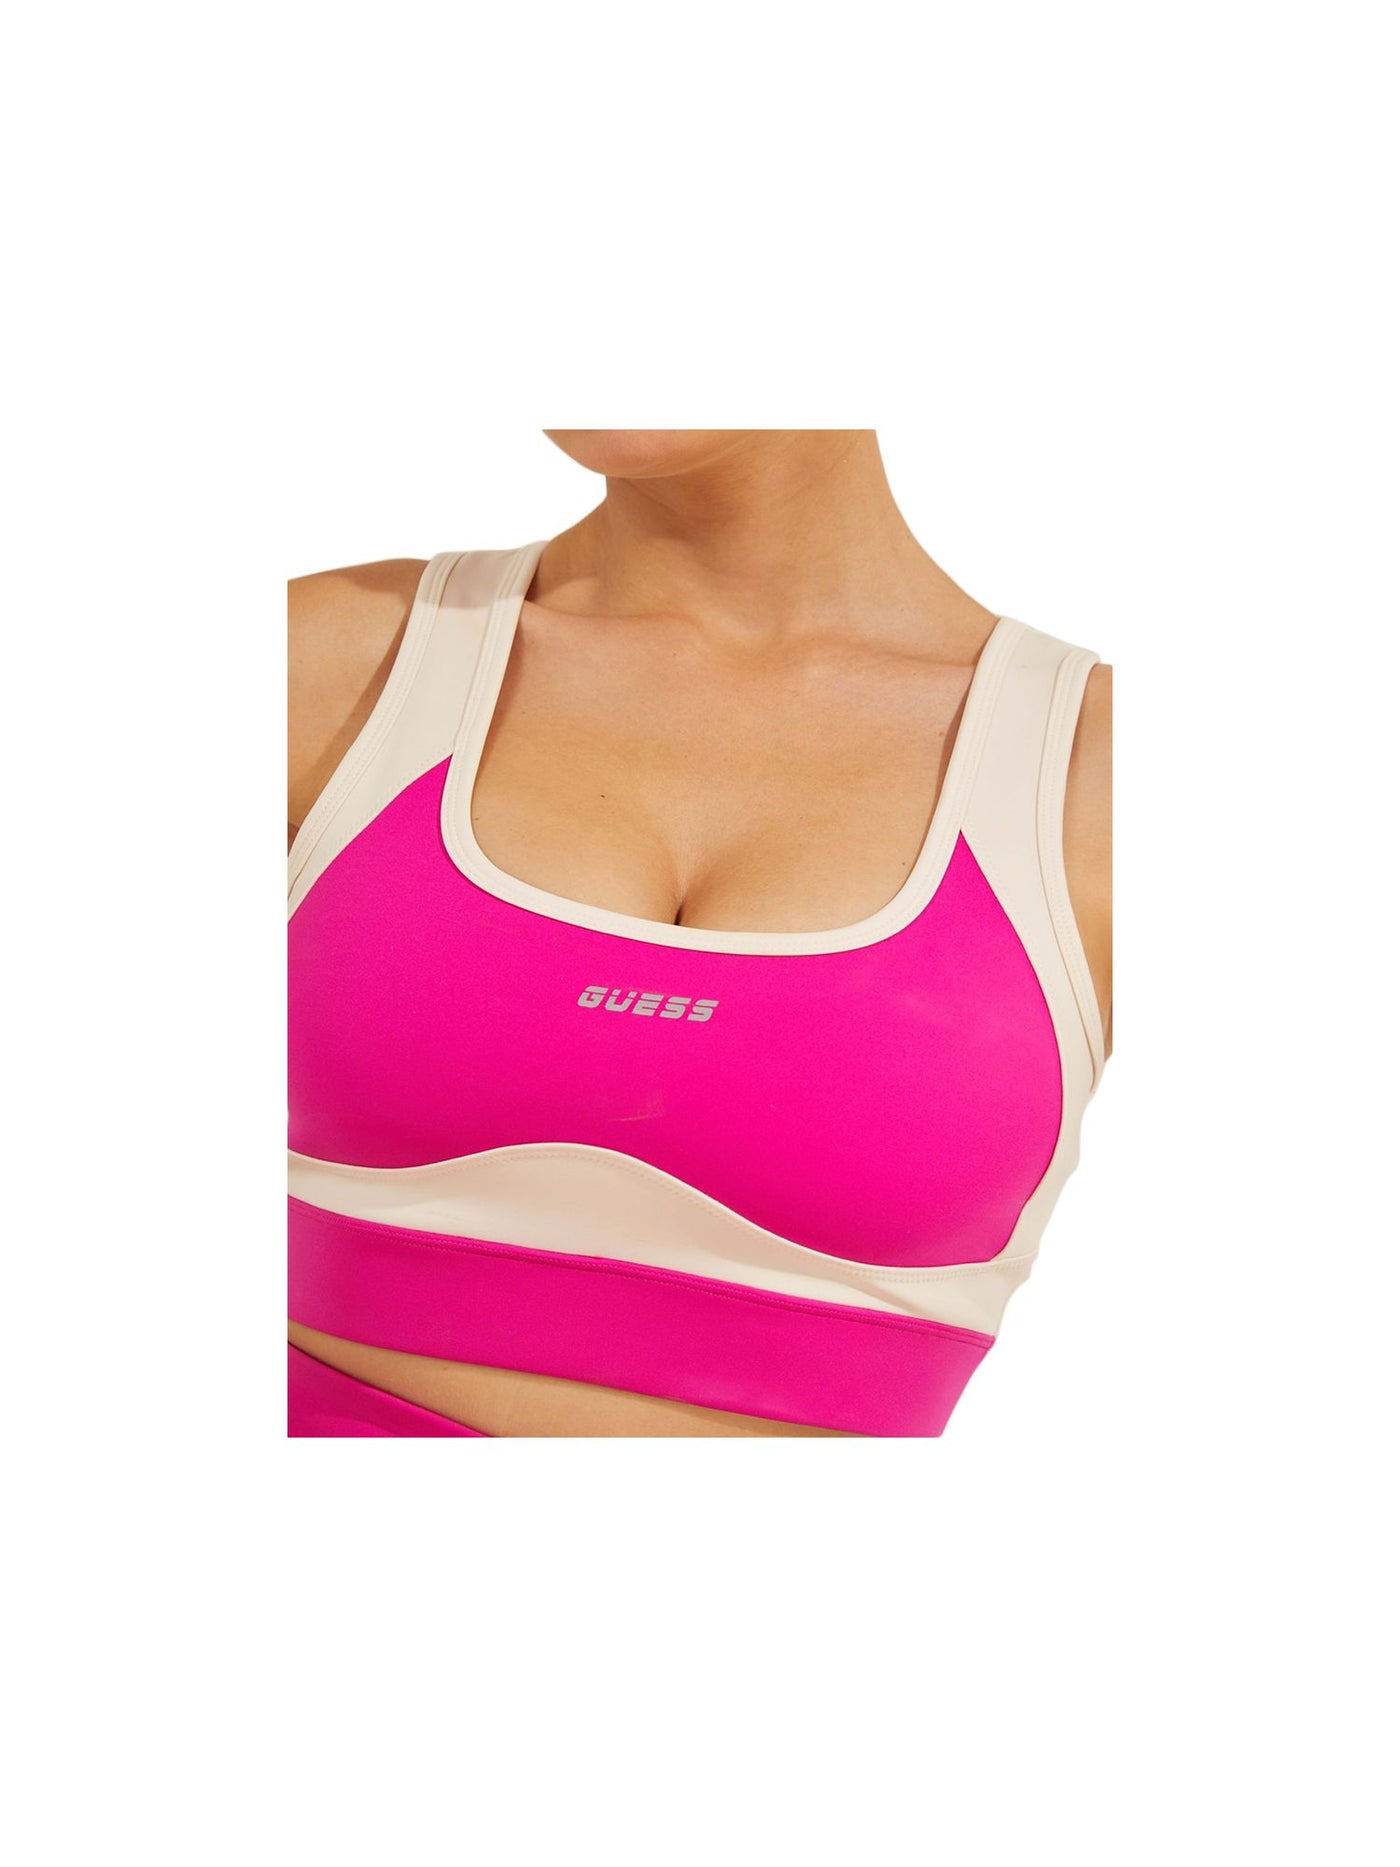 GUESS Intimates Pink Compression Cutouts at back Square neckline Sports Bra M